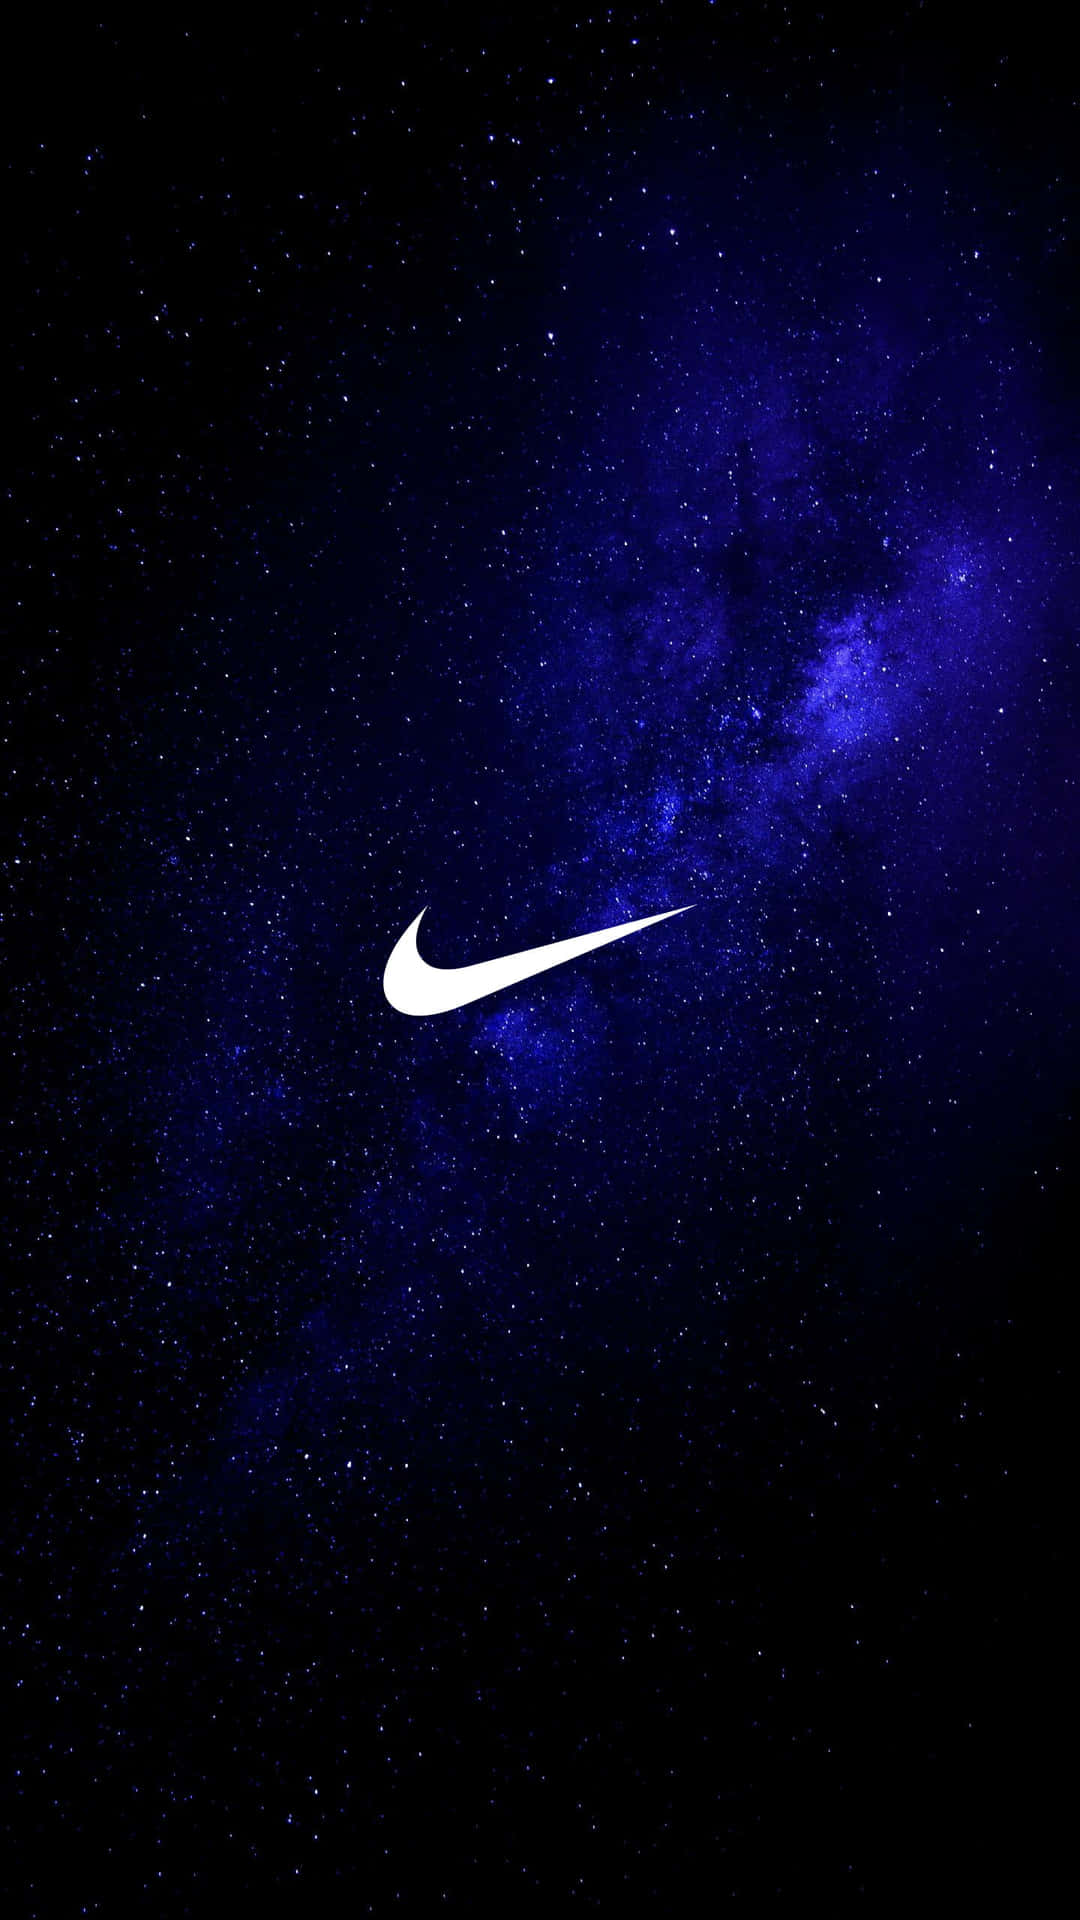 Swoosh Nike Galaxy Blue Nebula Wallpaper